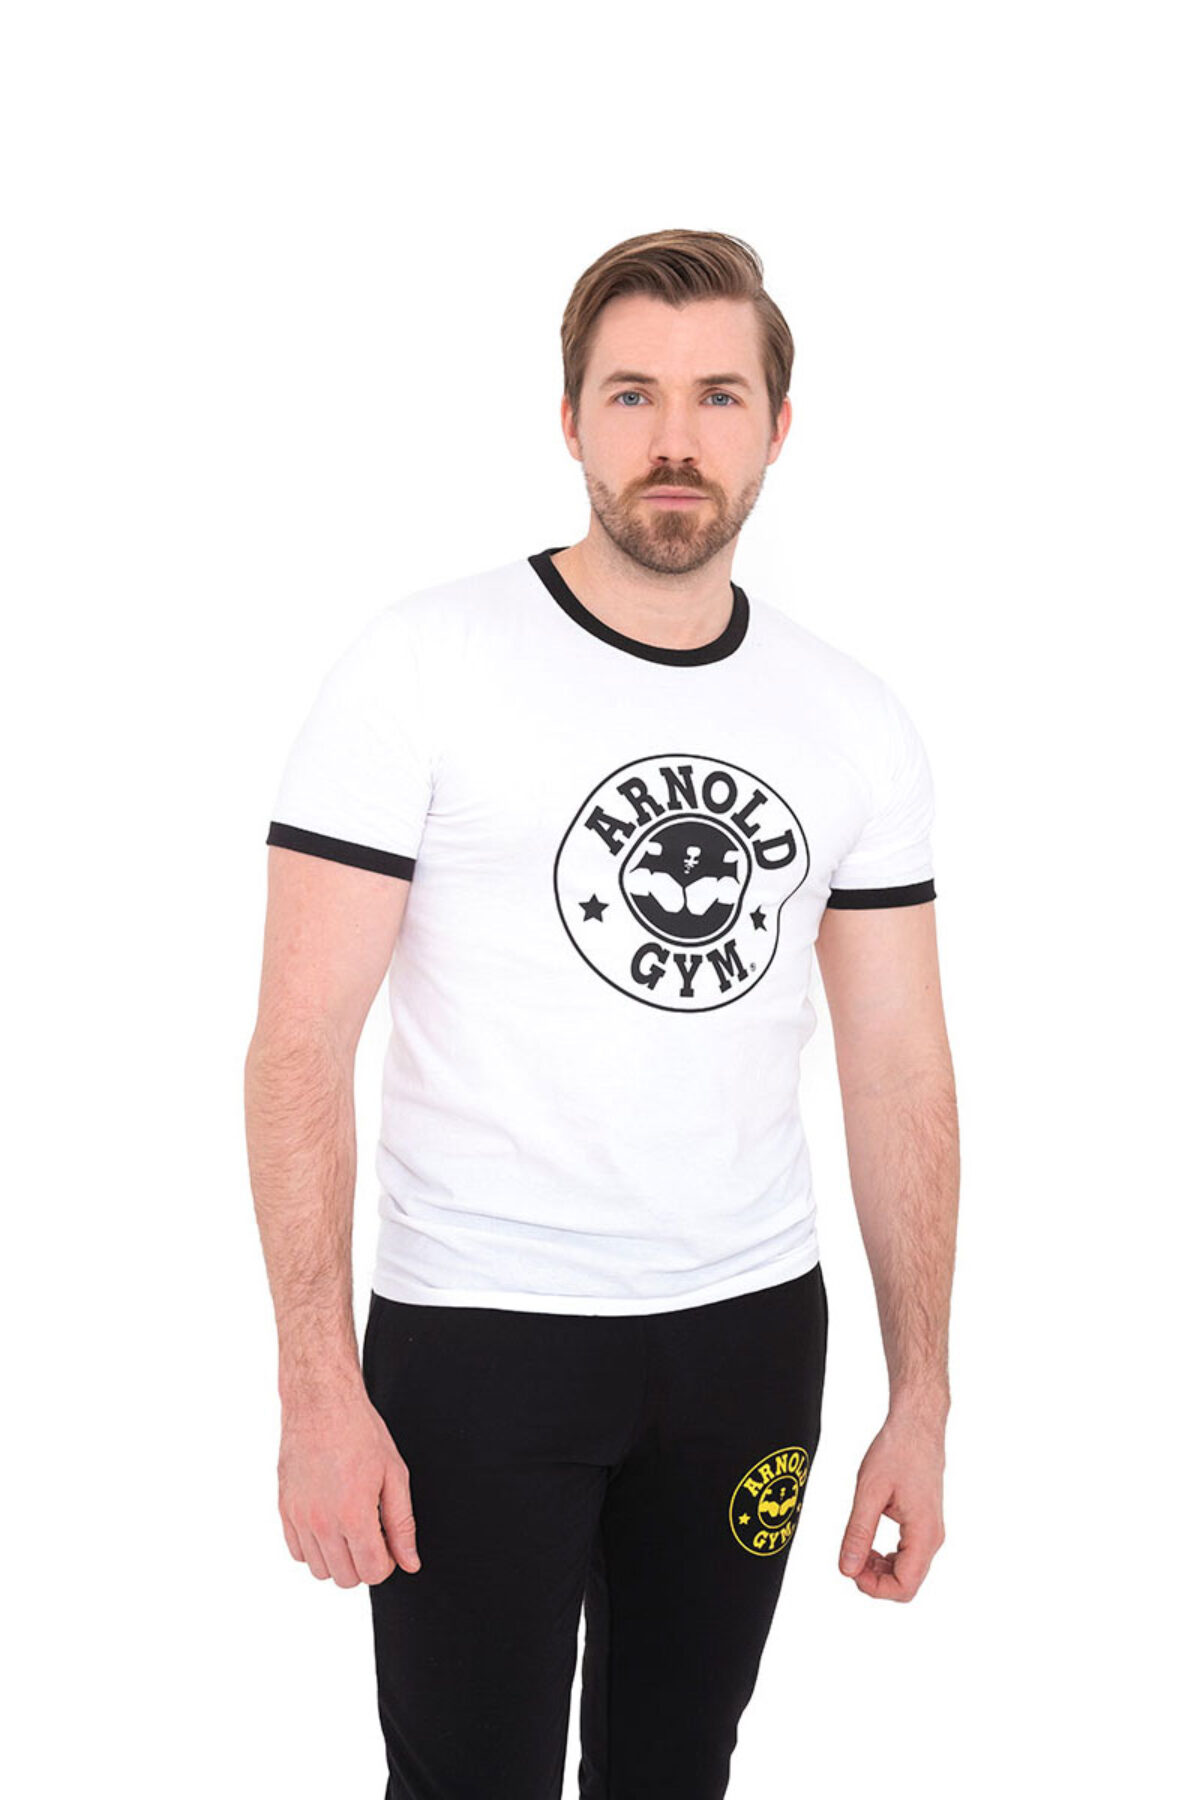 Retro Bodybuilding T-shirt Fitness Training Top | Arnold